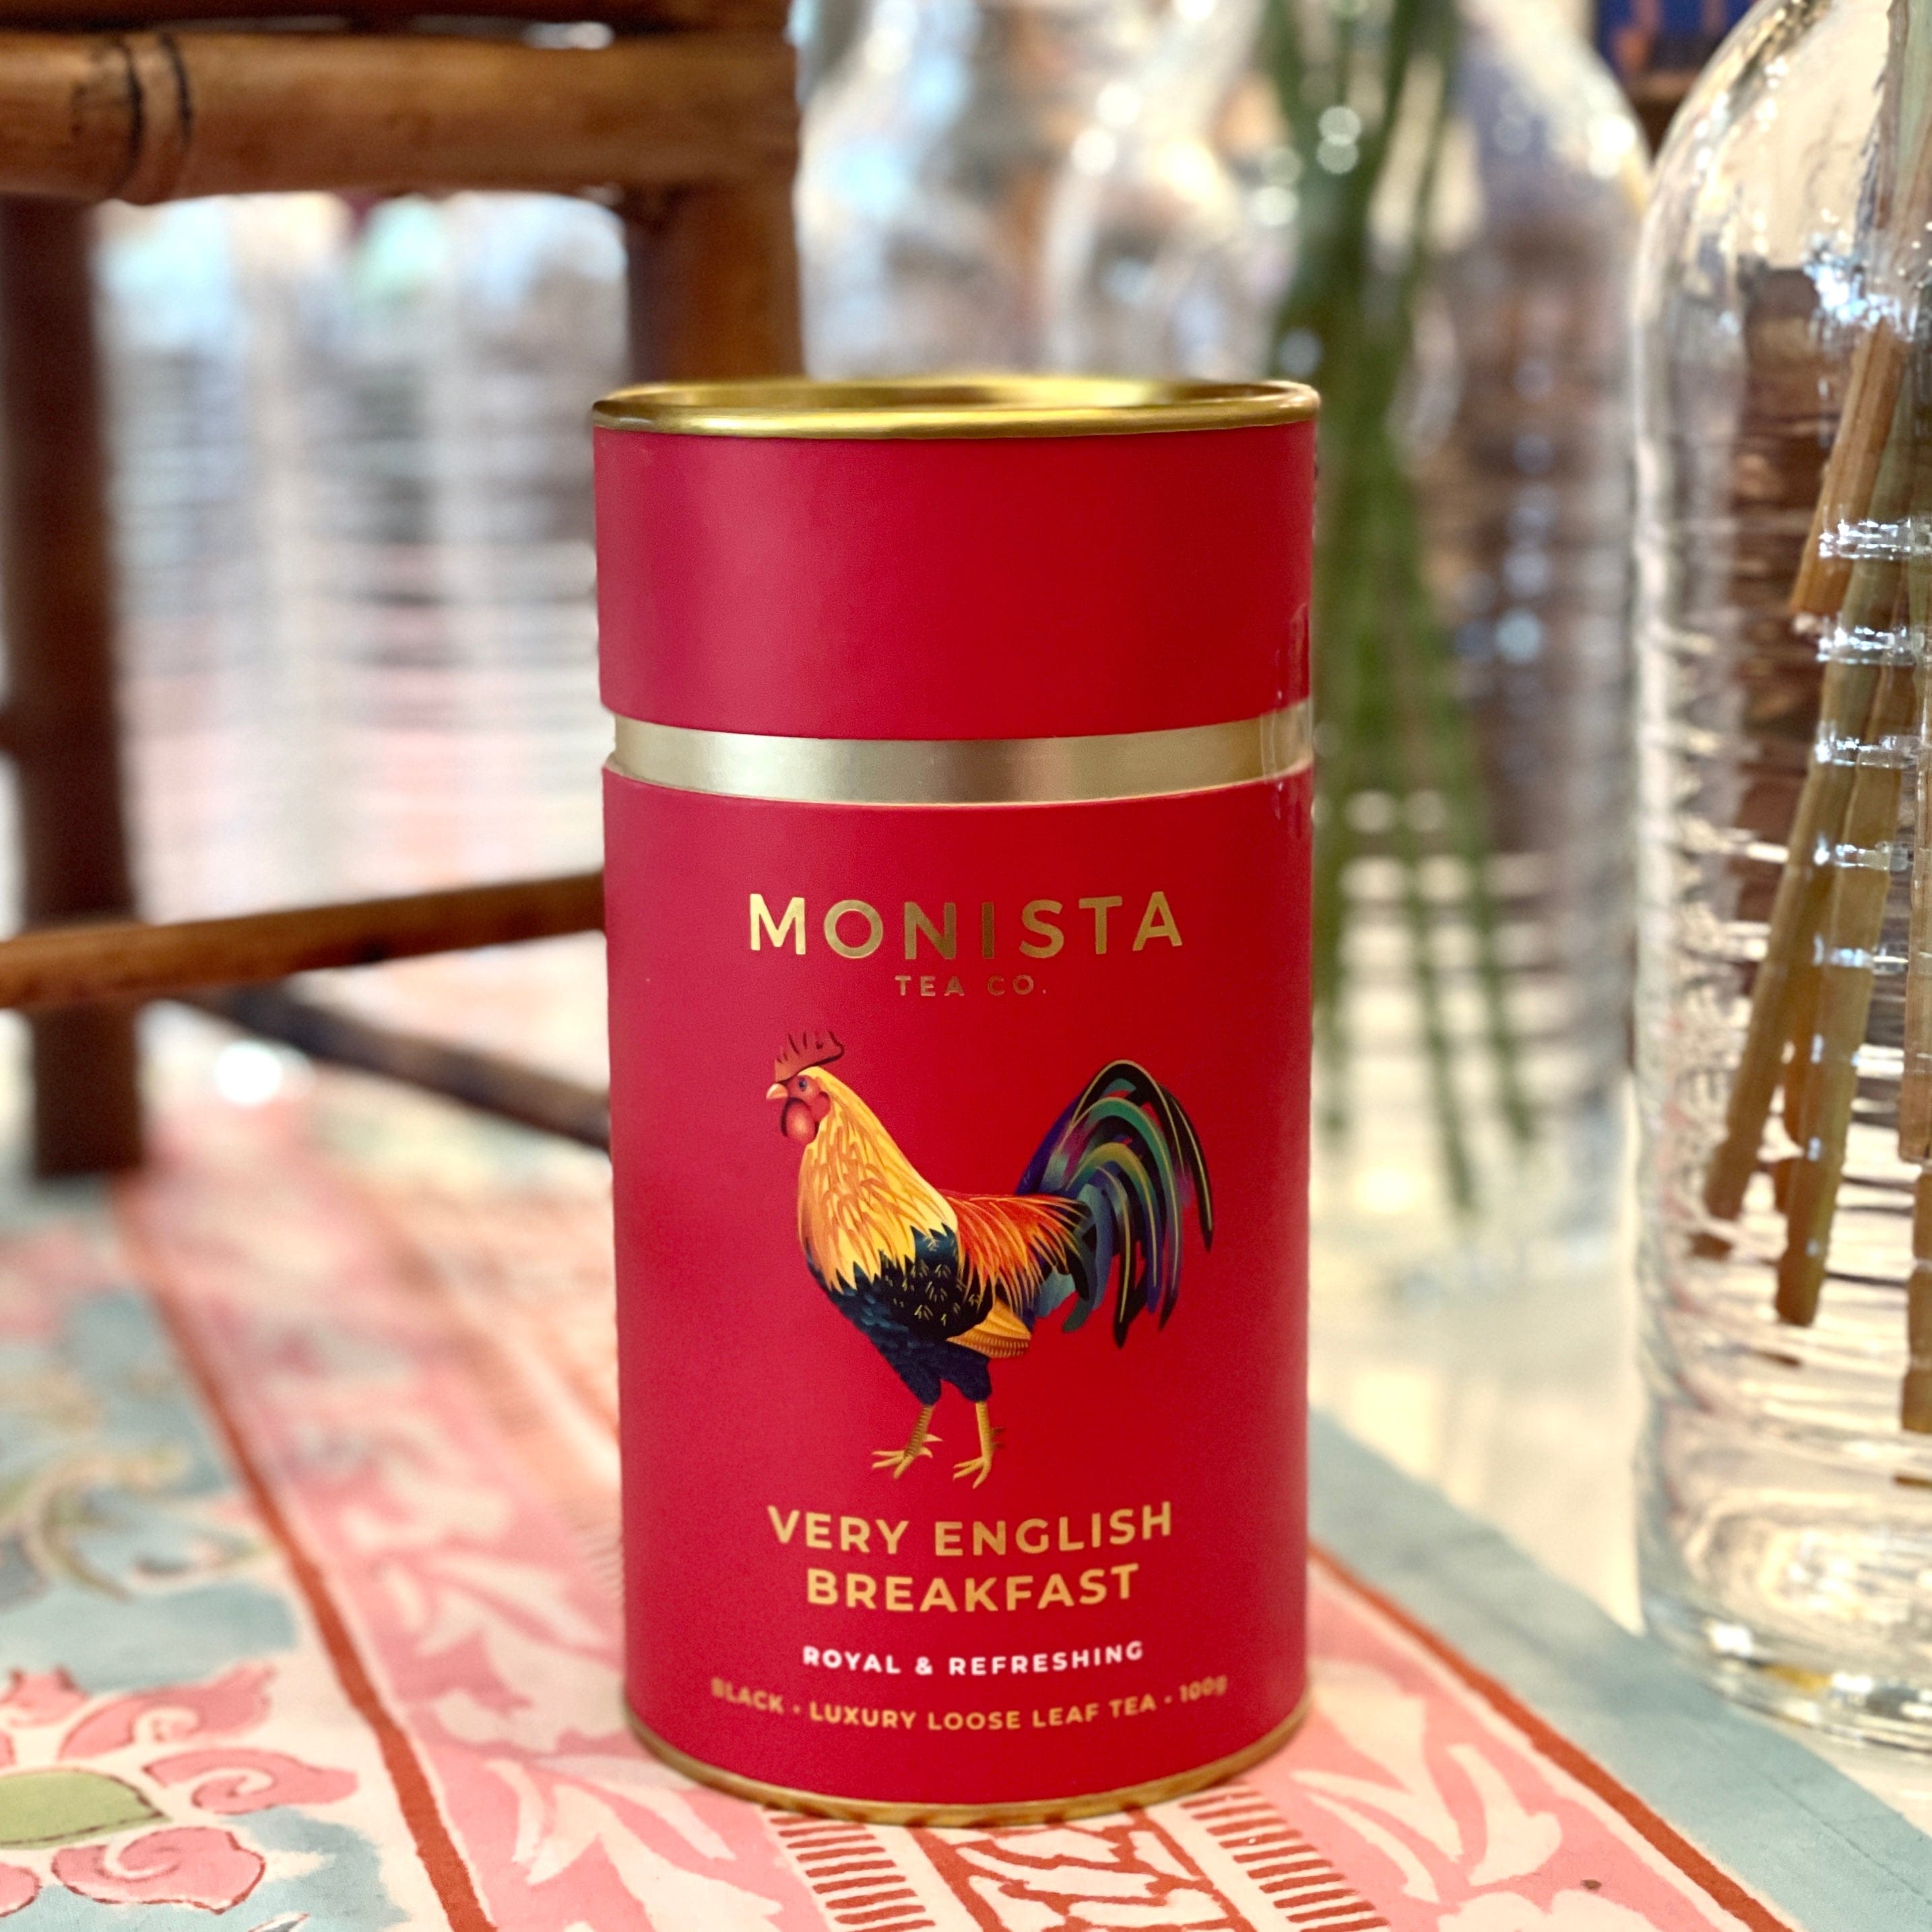 Very English Breakfast Monista Tea Co - Loose Leaf Tea - PORCH